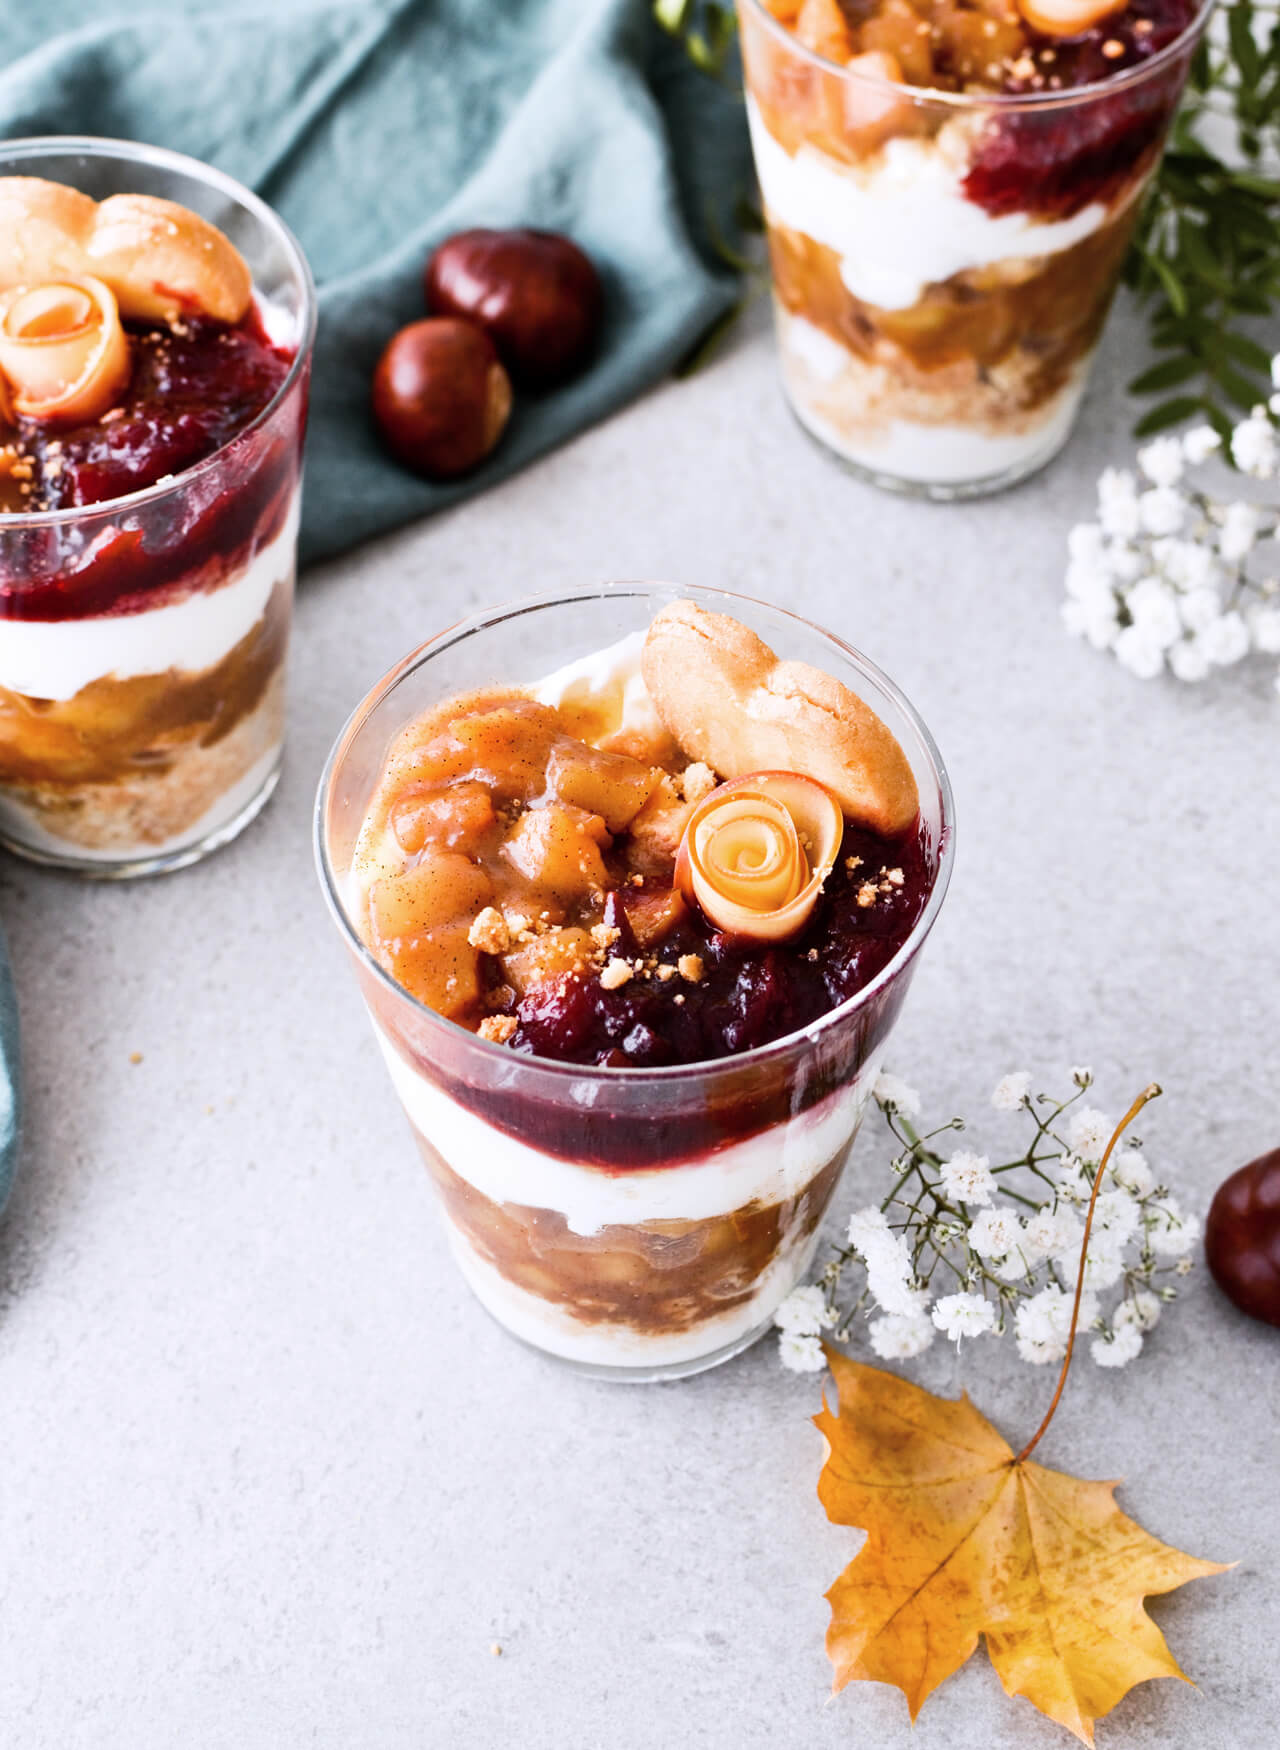 Make healthy dessert, that is still rich in taste, with this recipe for Caramelized apple yogurt dessert jars!